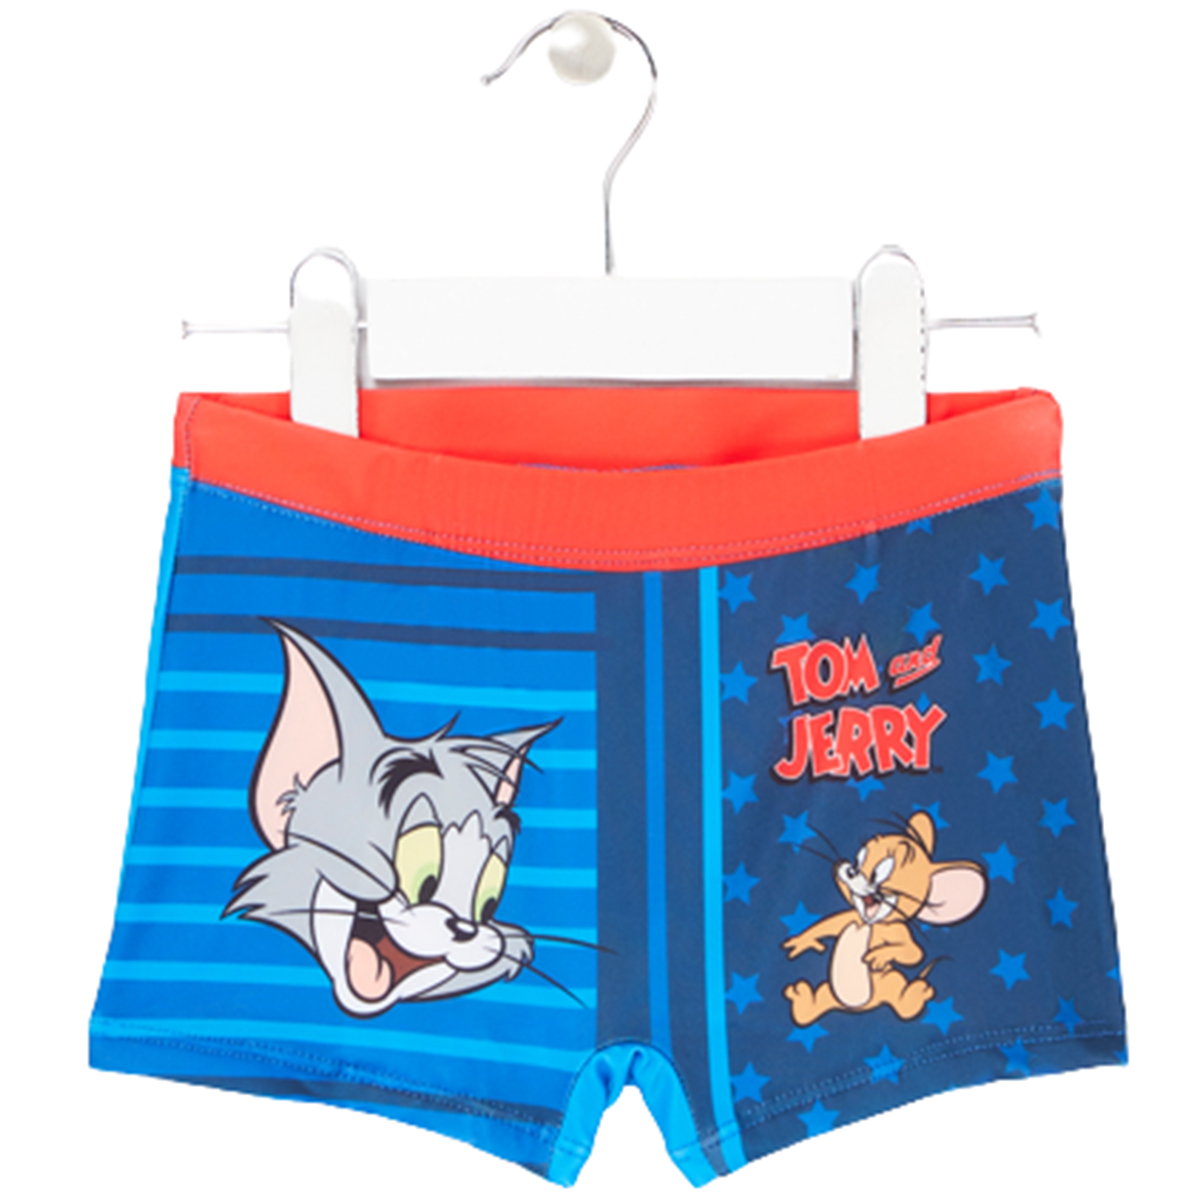 Tom et Jerry Swimsuit